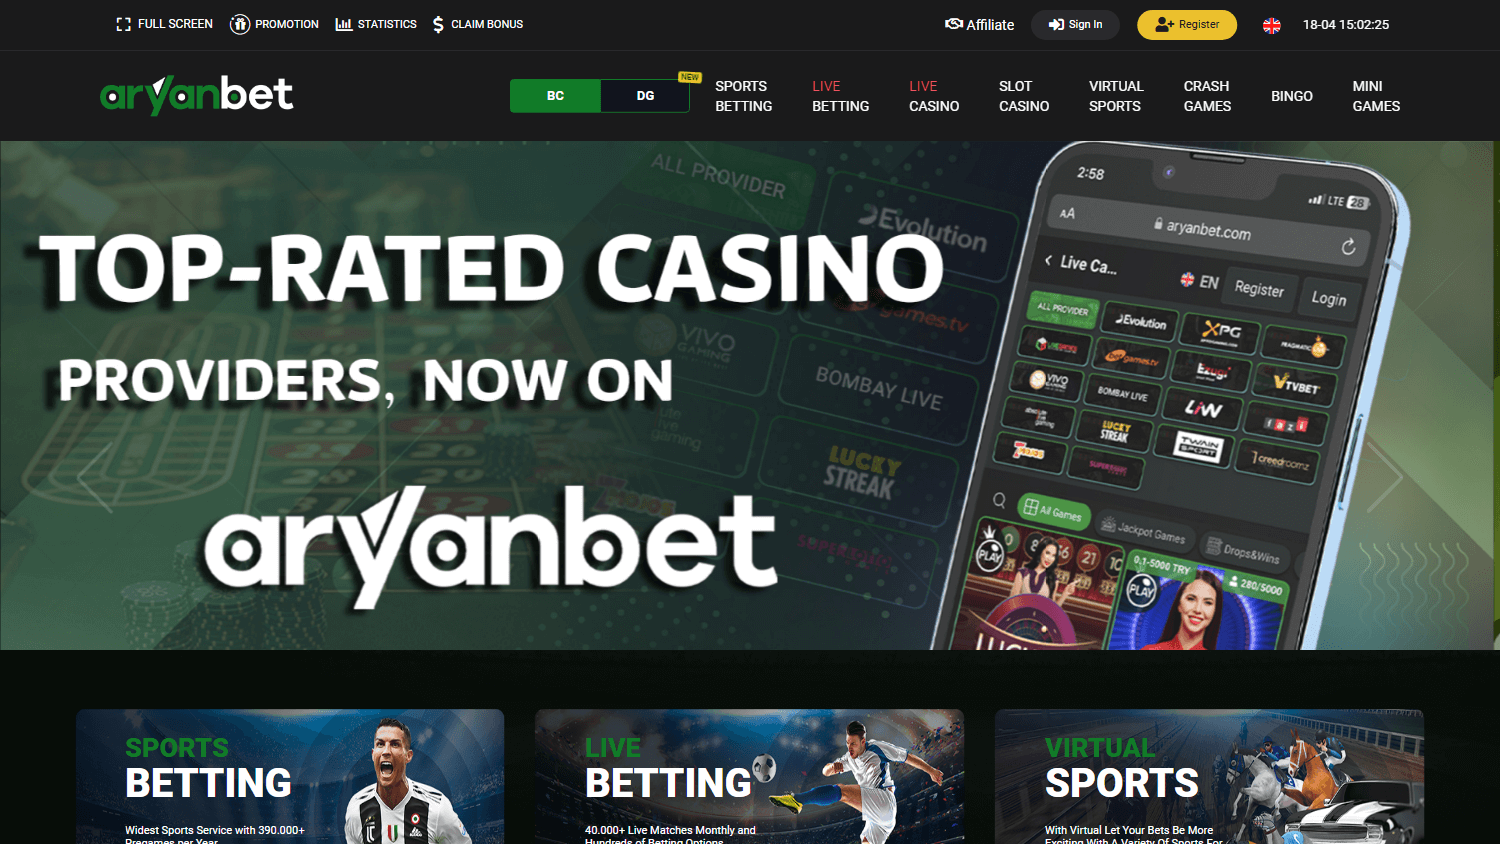 aryanbet_casino_homepage_desktop